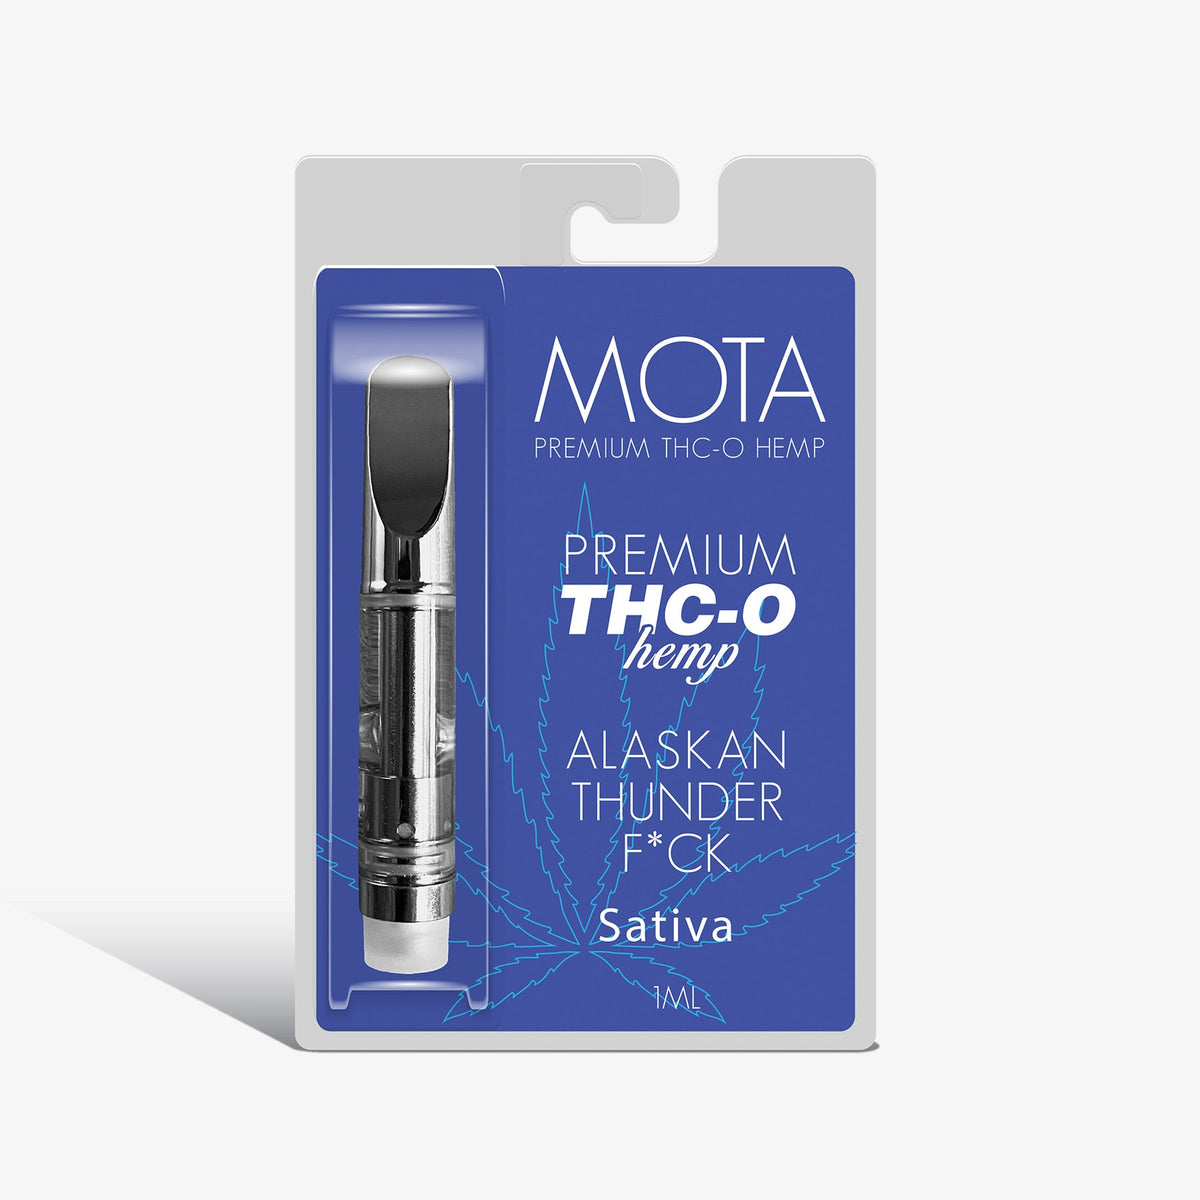 THC-O Cartridge - Alaskan Thunder F*ck - MOTA